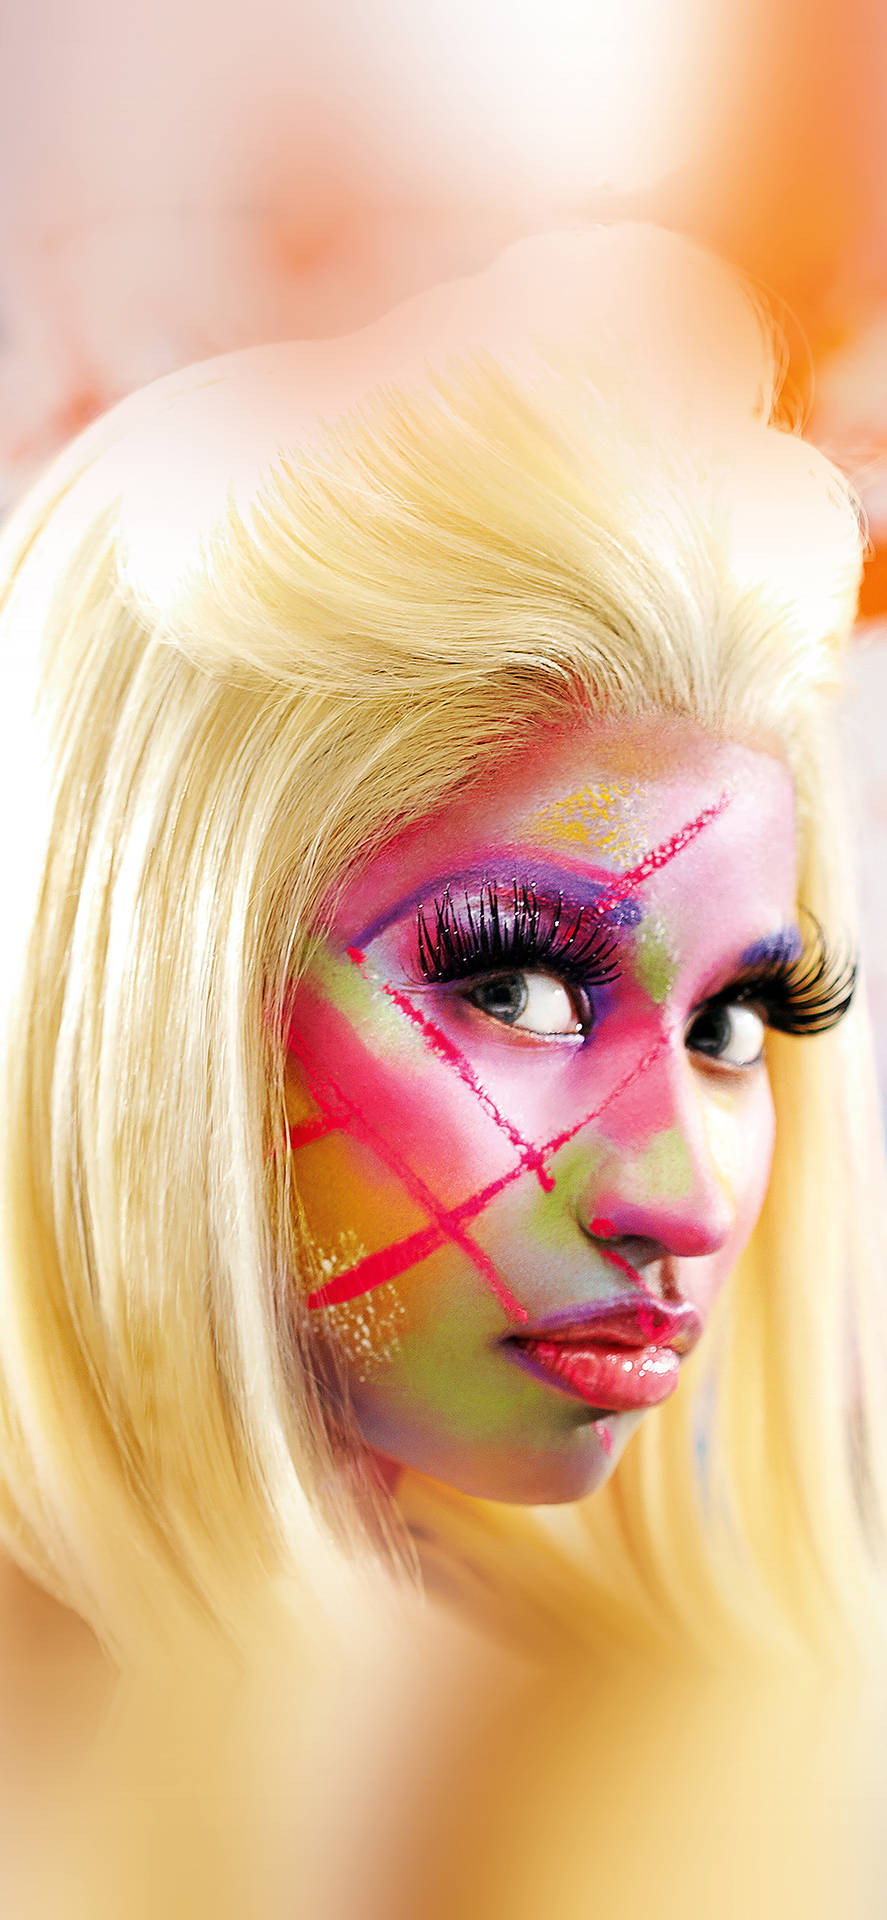 Nicki Minaj 1125X2436 Wallpaper and Background Image